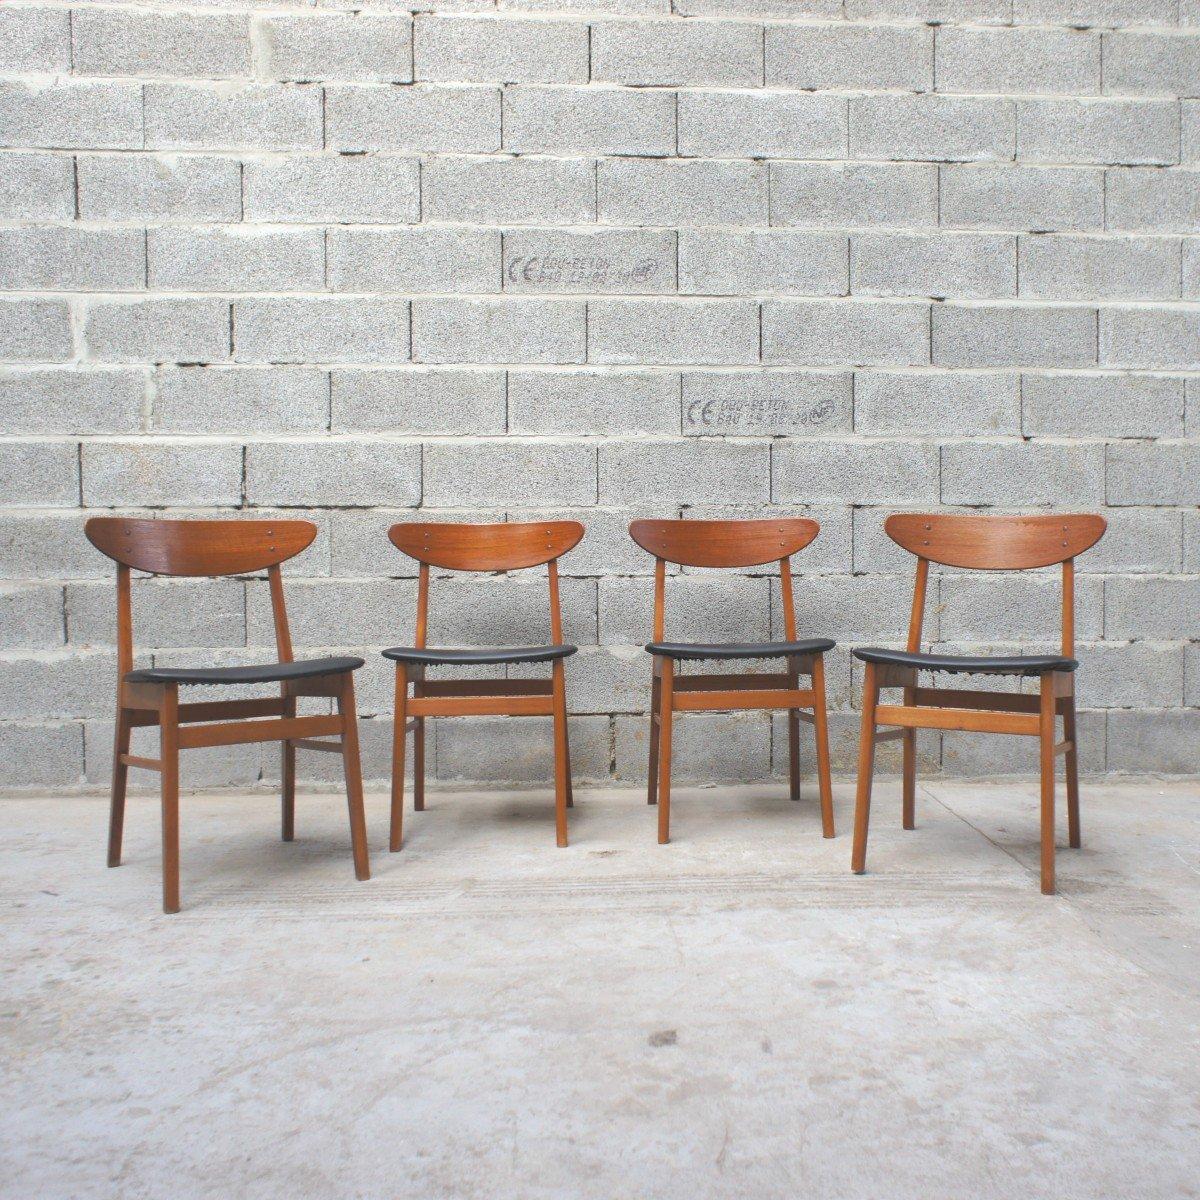 20th Century Series of 4 Authentic Scandinavian Chairs Farstrup 210